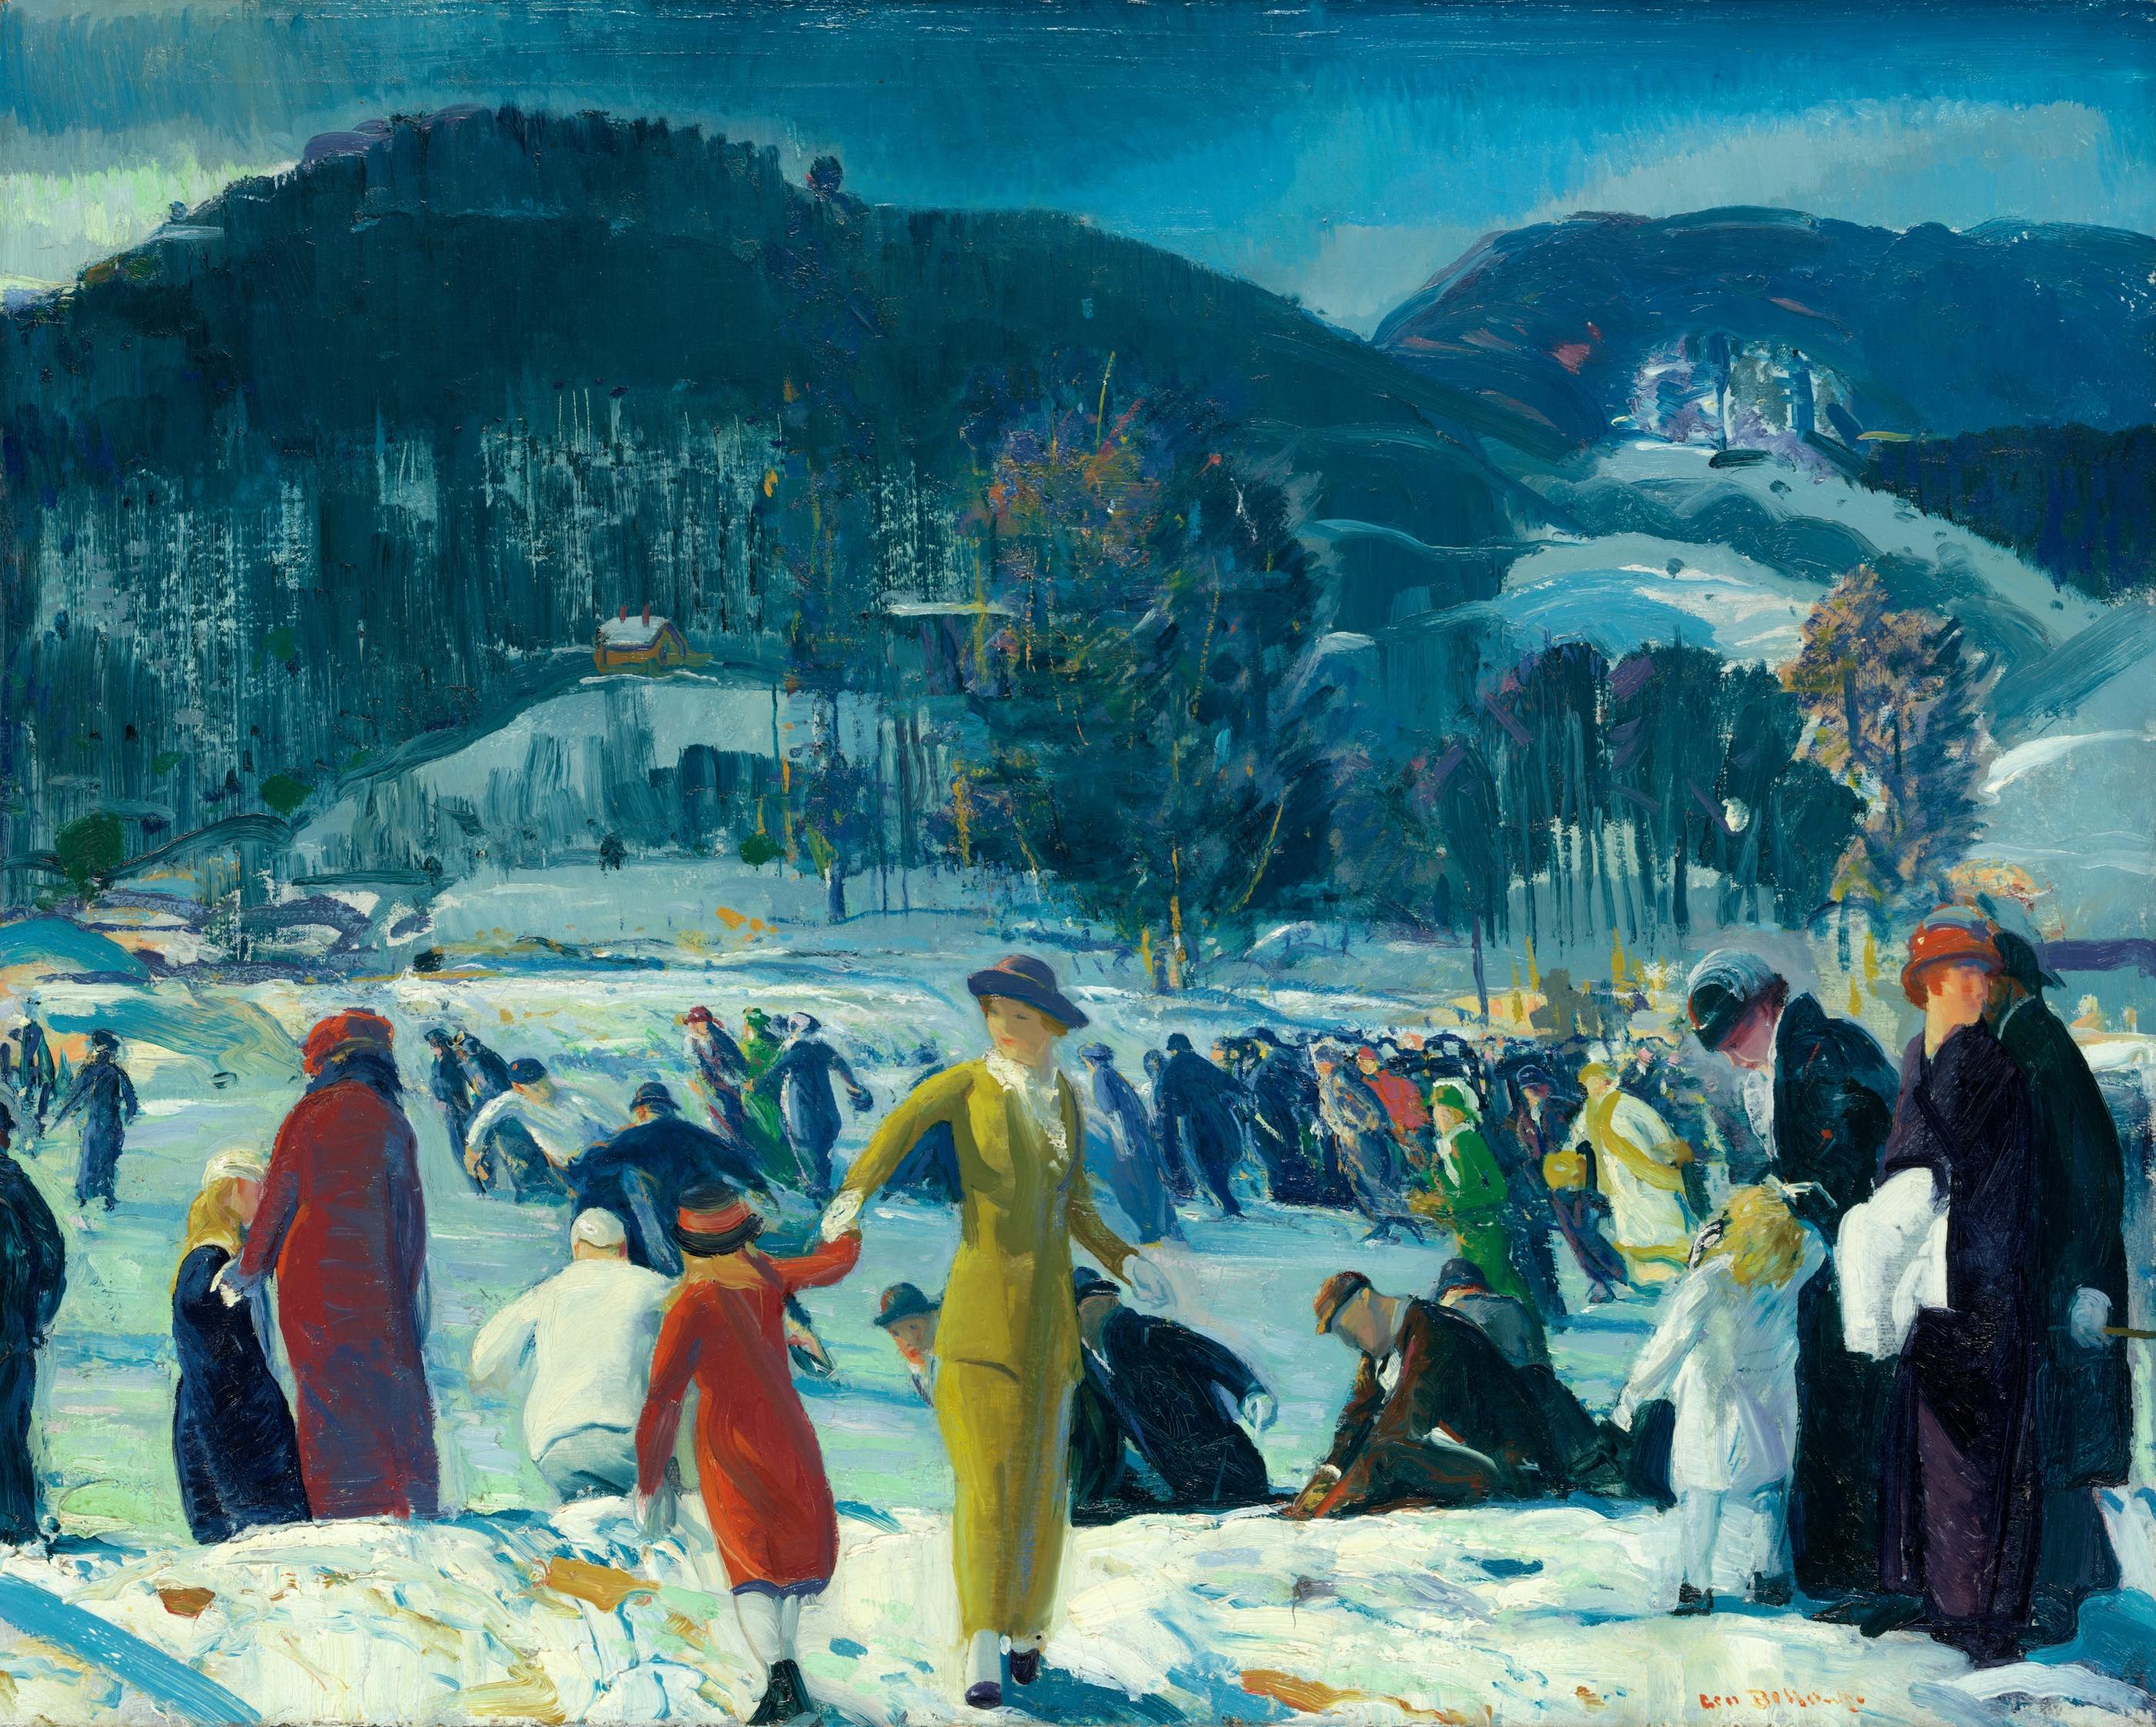 Amor al invierno by George Bellows - 1914 - 81,6 x 101,6 cm Instituto de Arte de Chicago